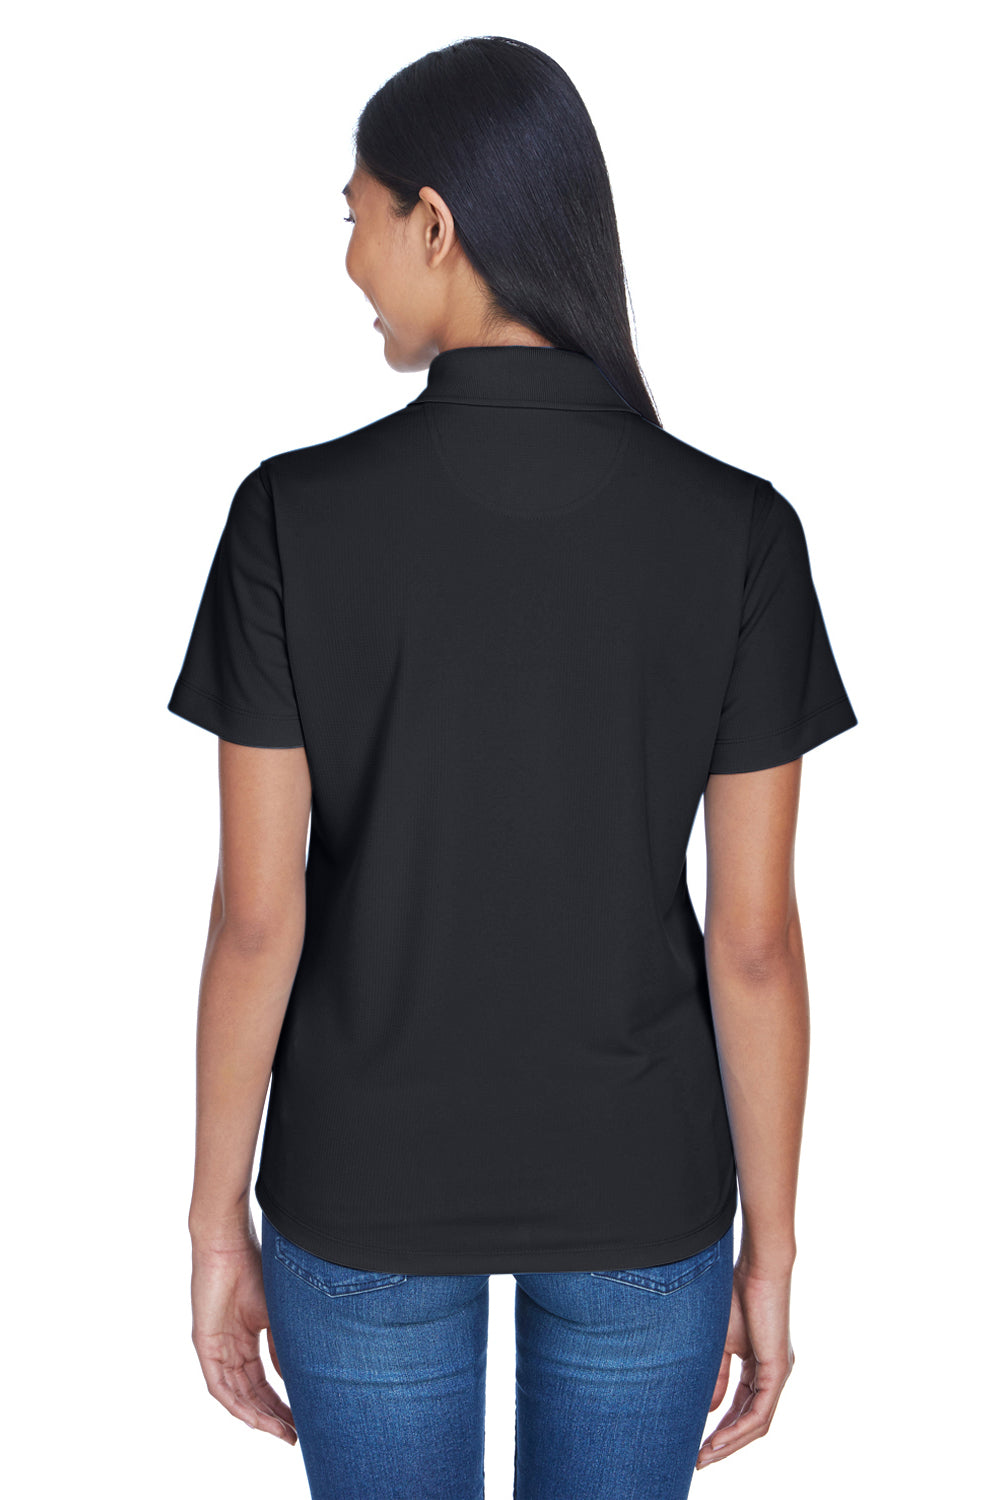 UltraClub 8445L Womens Cool & Dry Performance Moisture Wicking Short Sleeve Polo Shirt Black Back